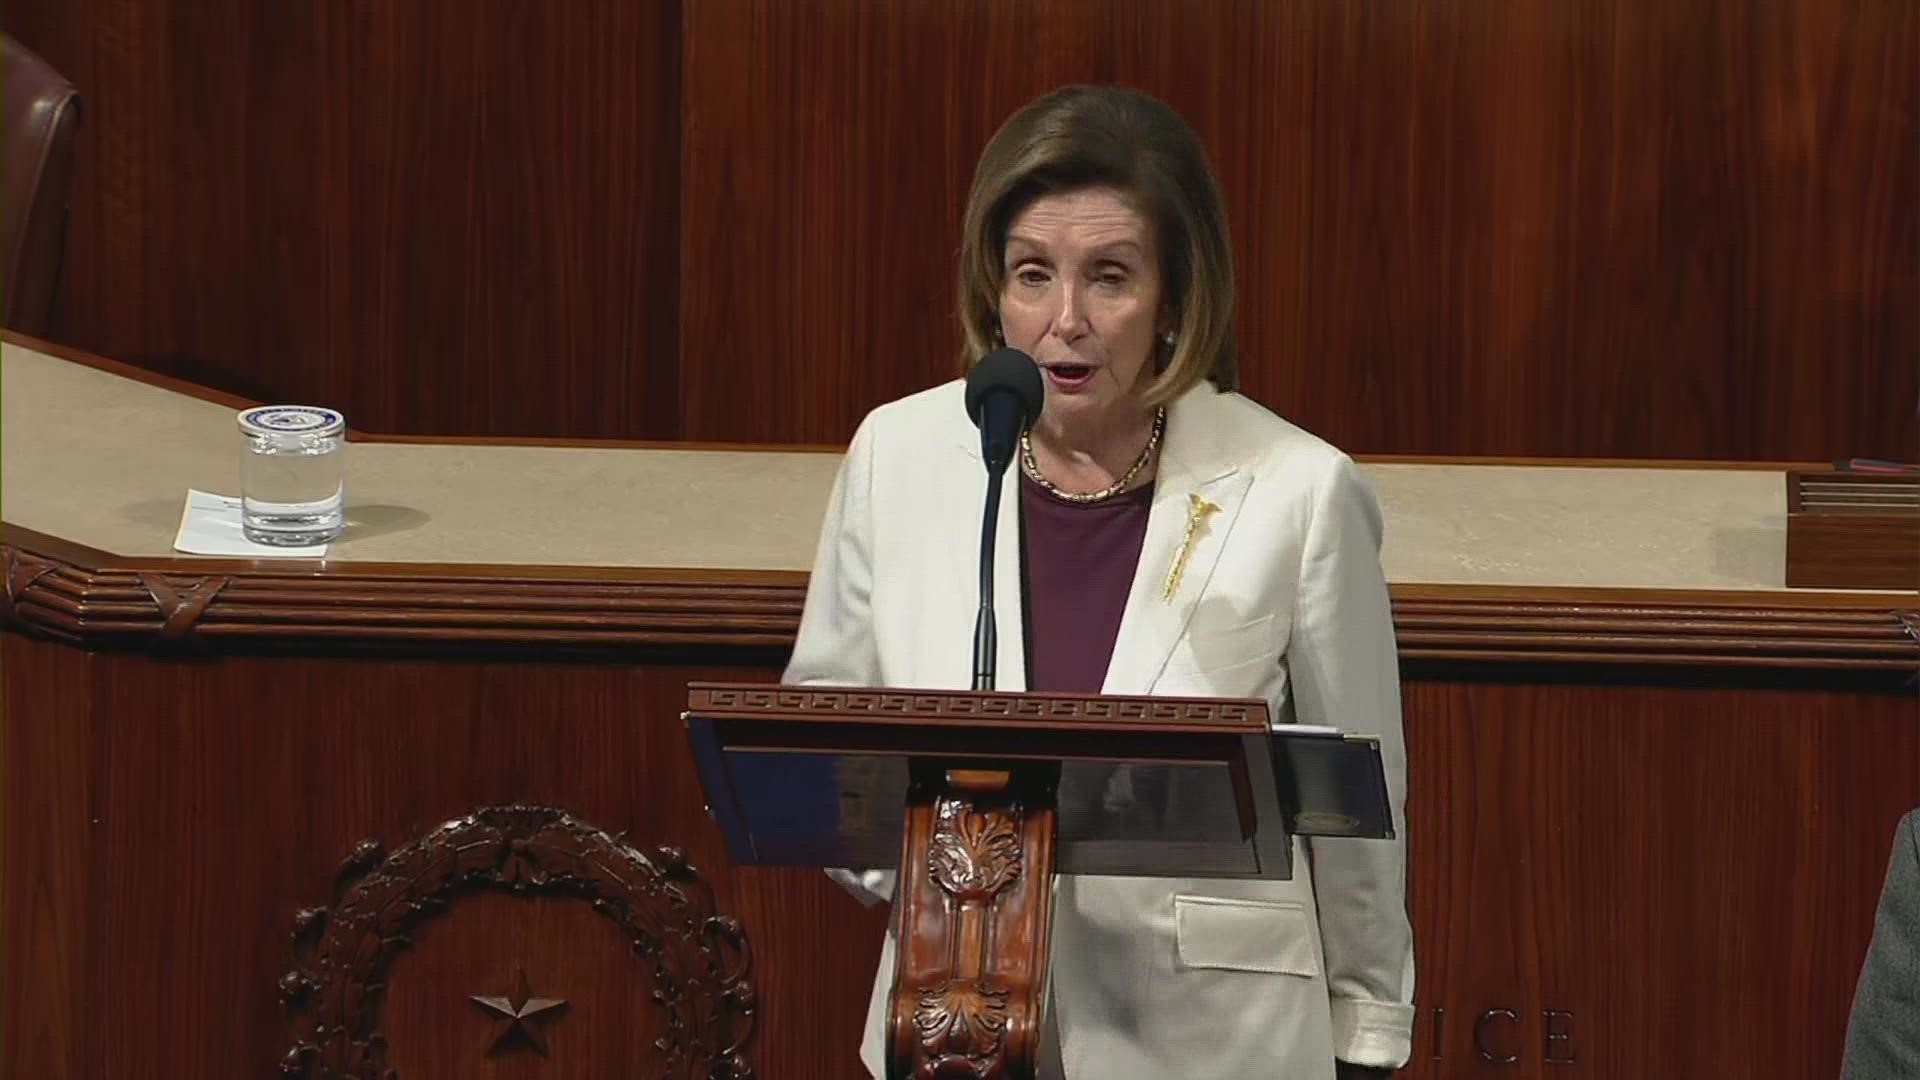 House Speaker Nancy Pelosi says she will not seek a leadership role in the new Congress.